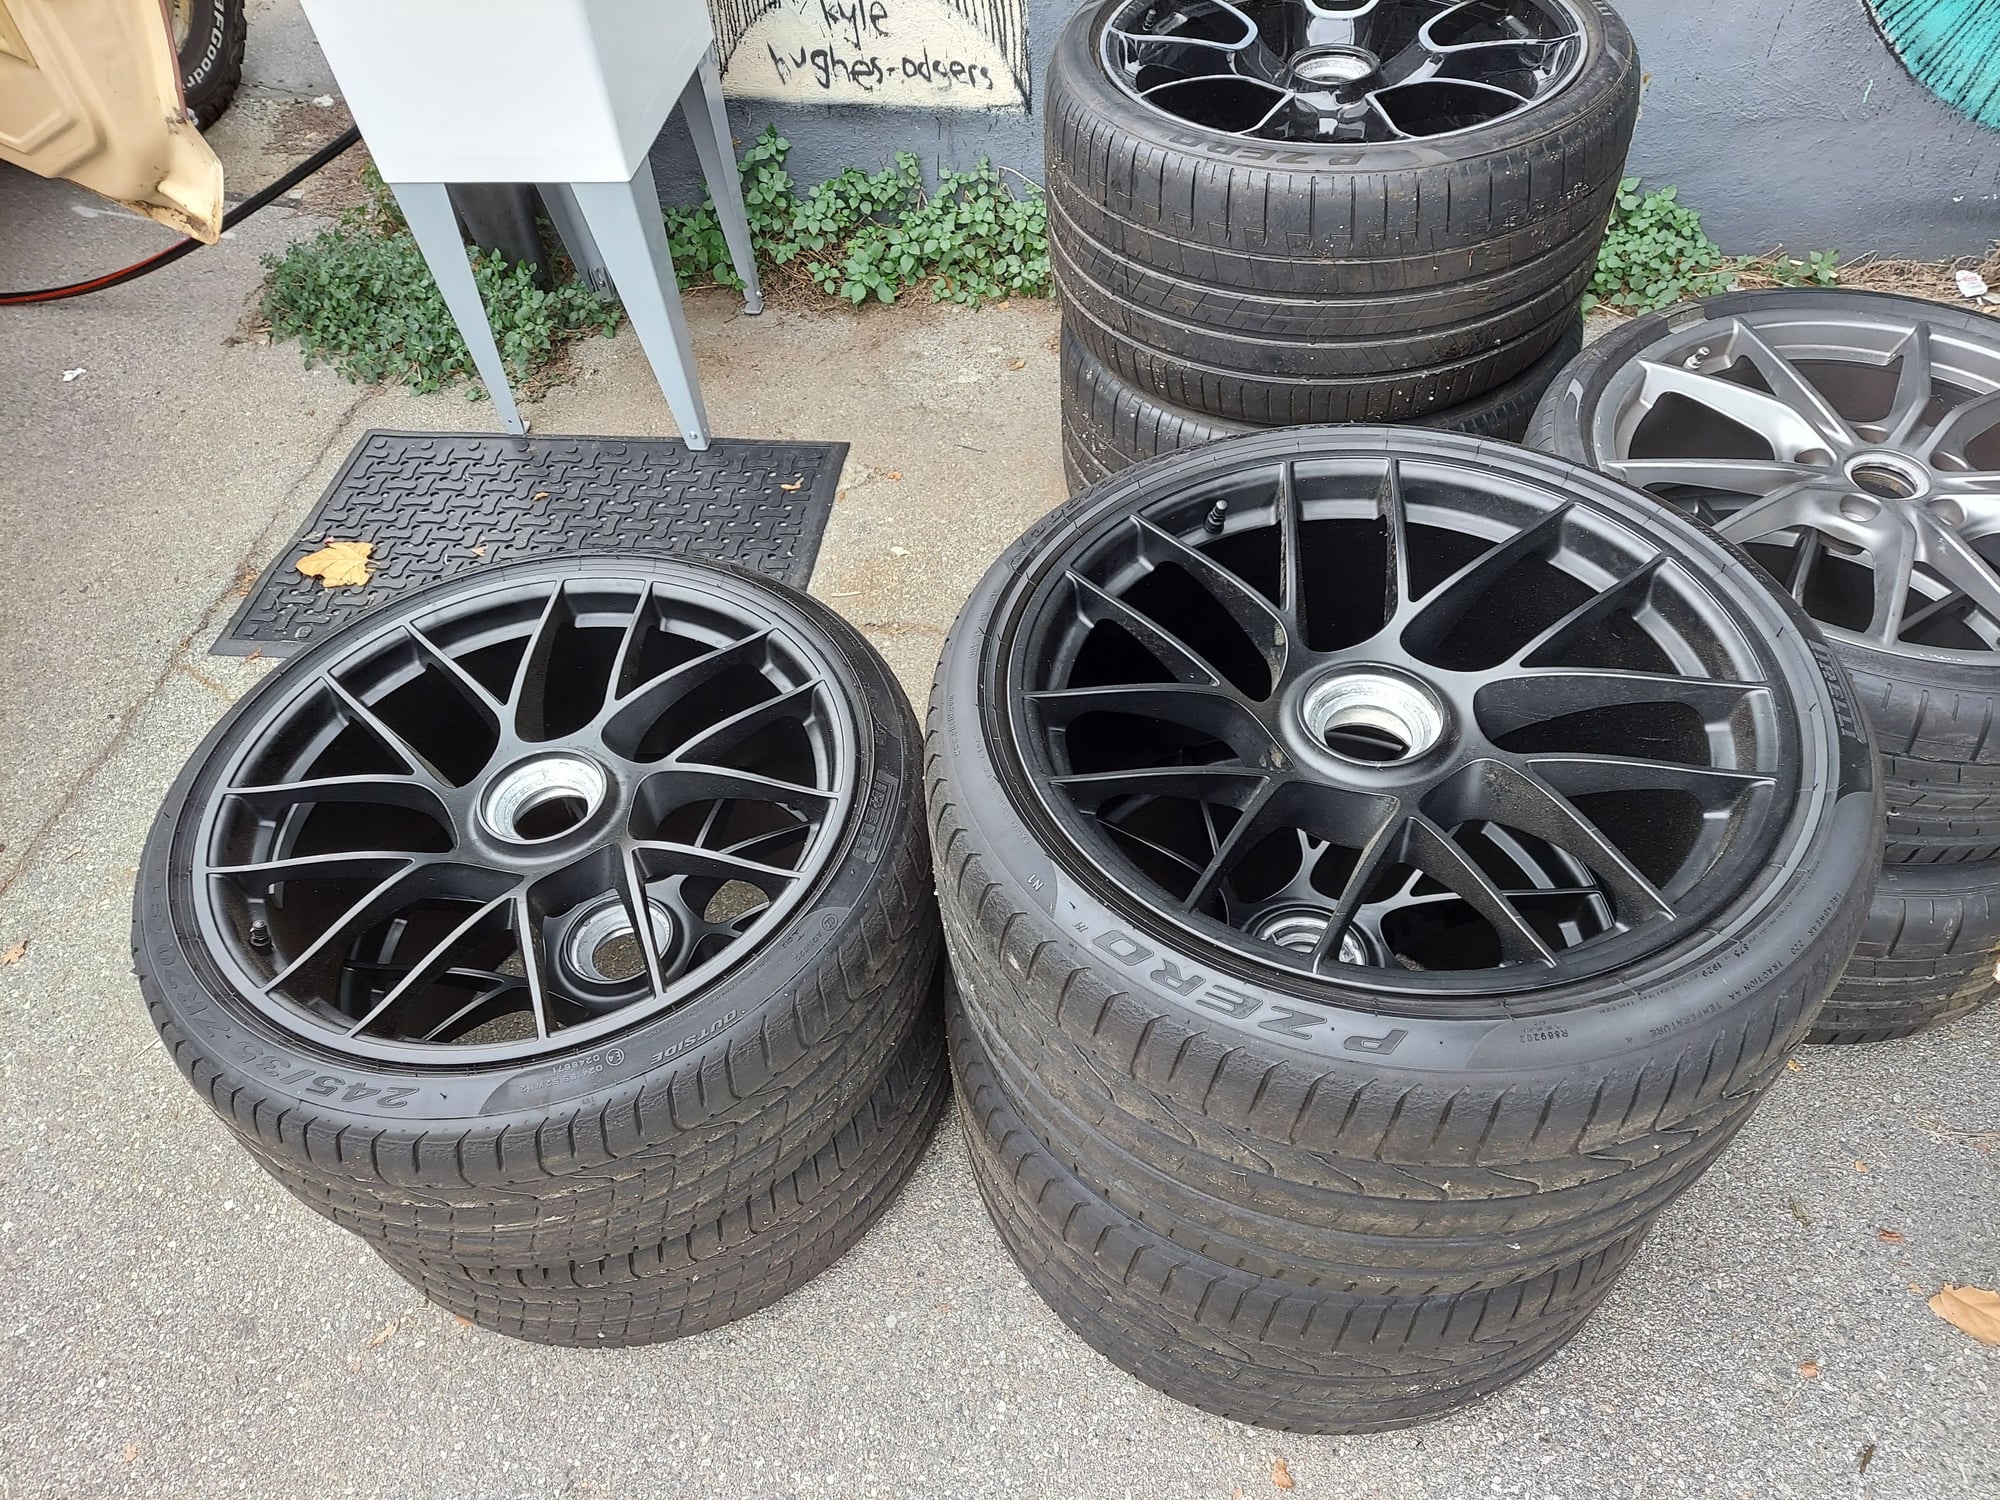 Wheels and Tires/Axles - Original Porsche 20 inch 991.2 GTS 4 Turbo S 20" satin black centerlock wheels tires - Used - 2016 to 2019 Porsche 911 - Los Angeles, CA 90065, United States